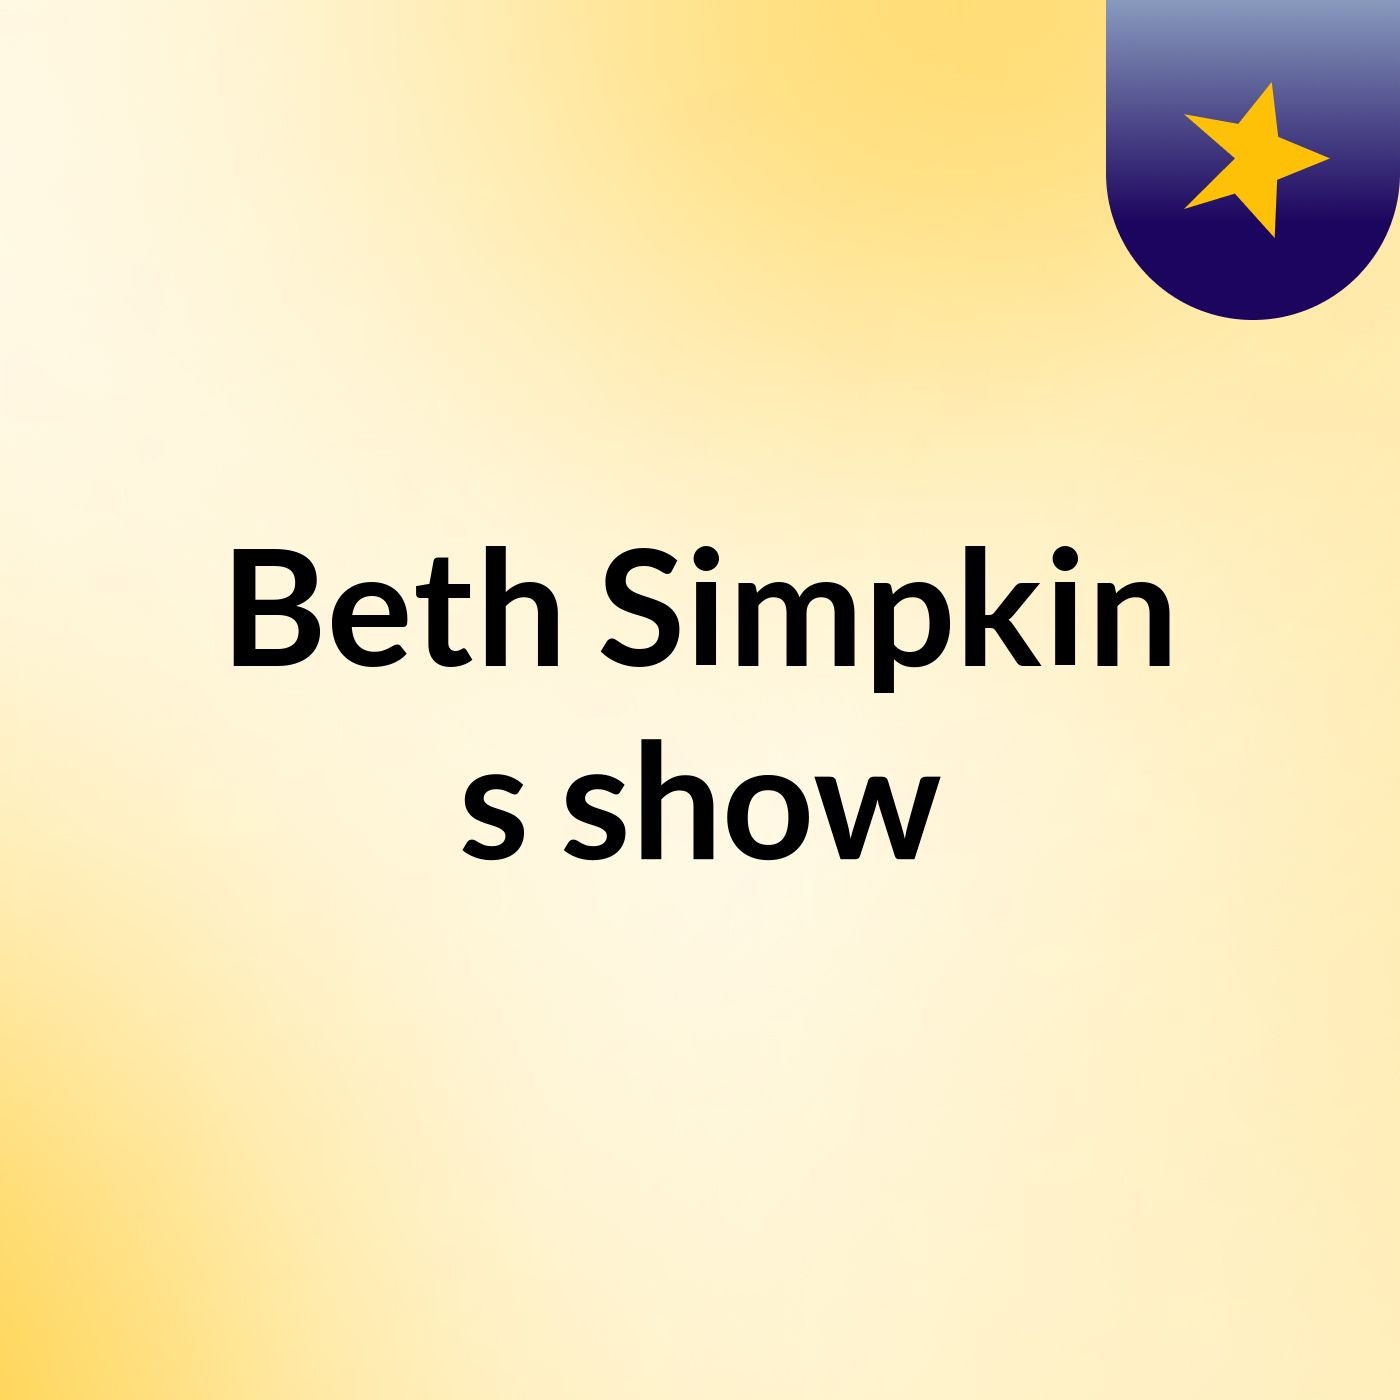 Beth Simpkin's show